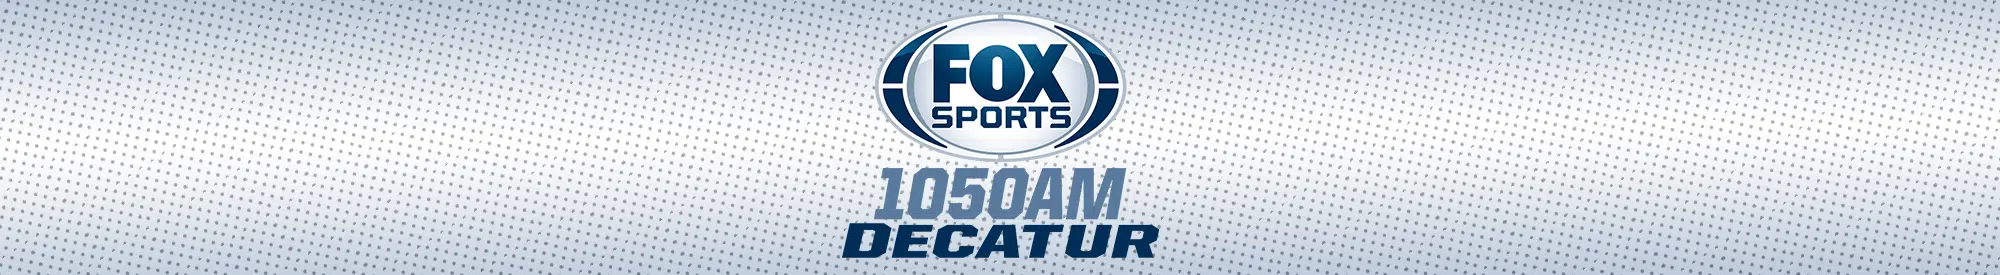 FOX Sports 1050 AM